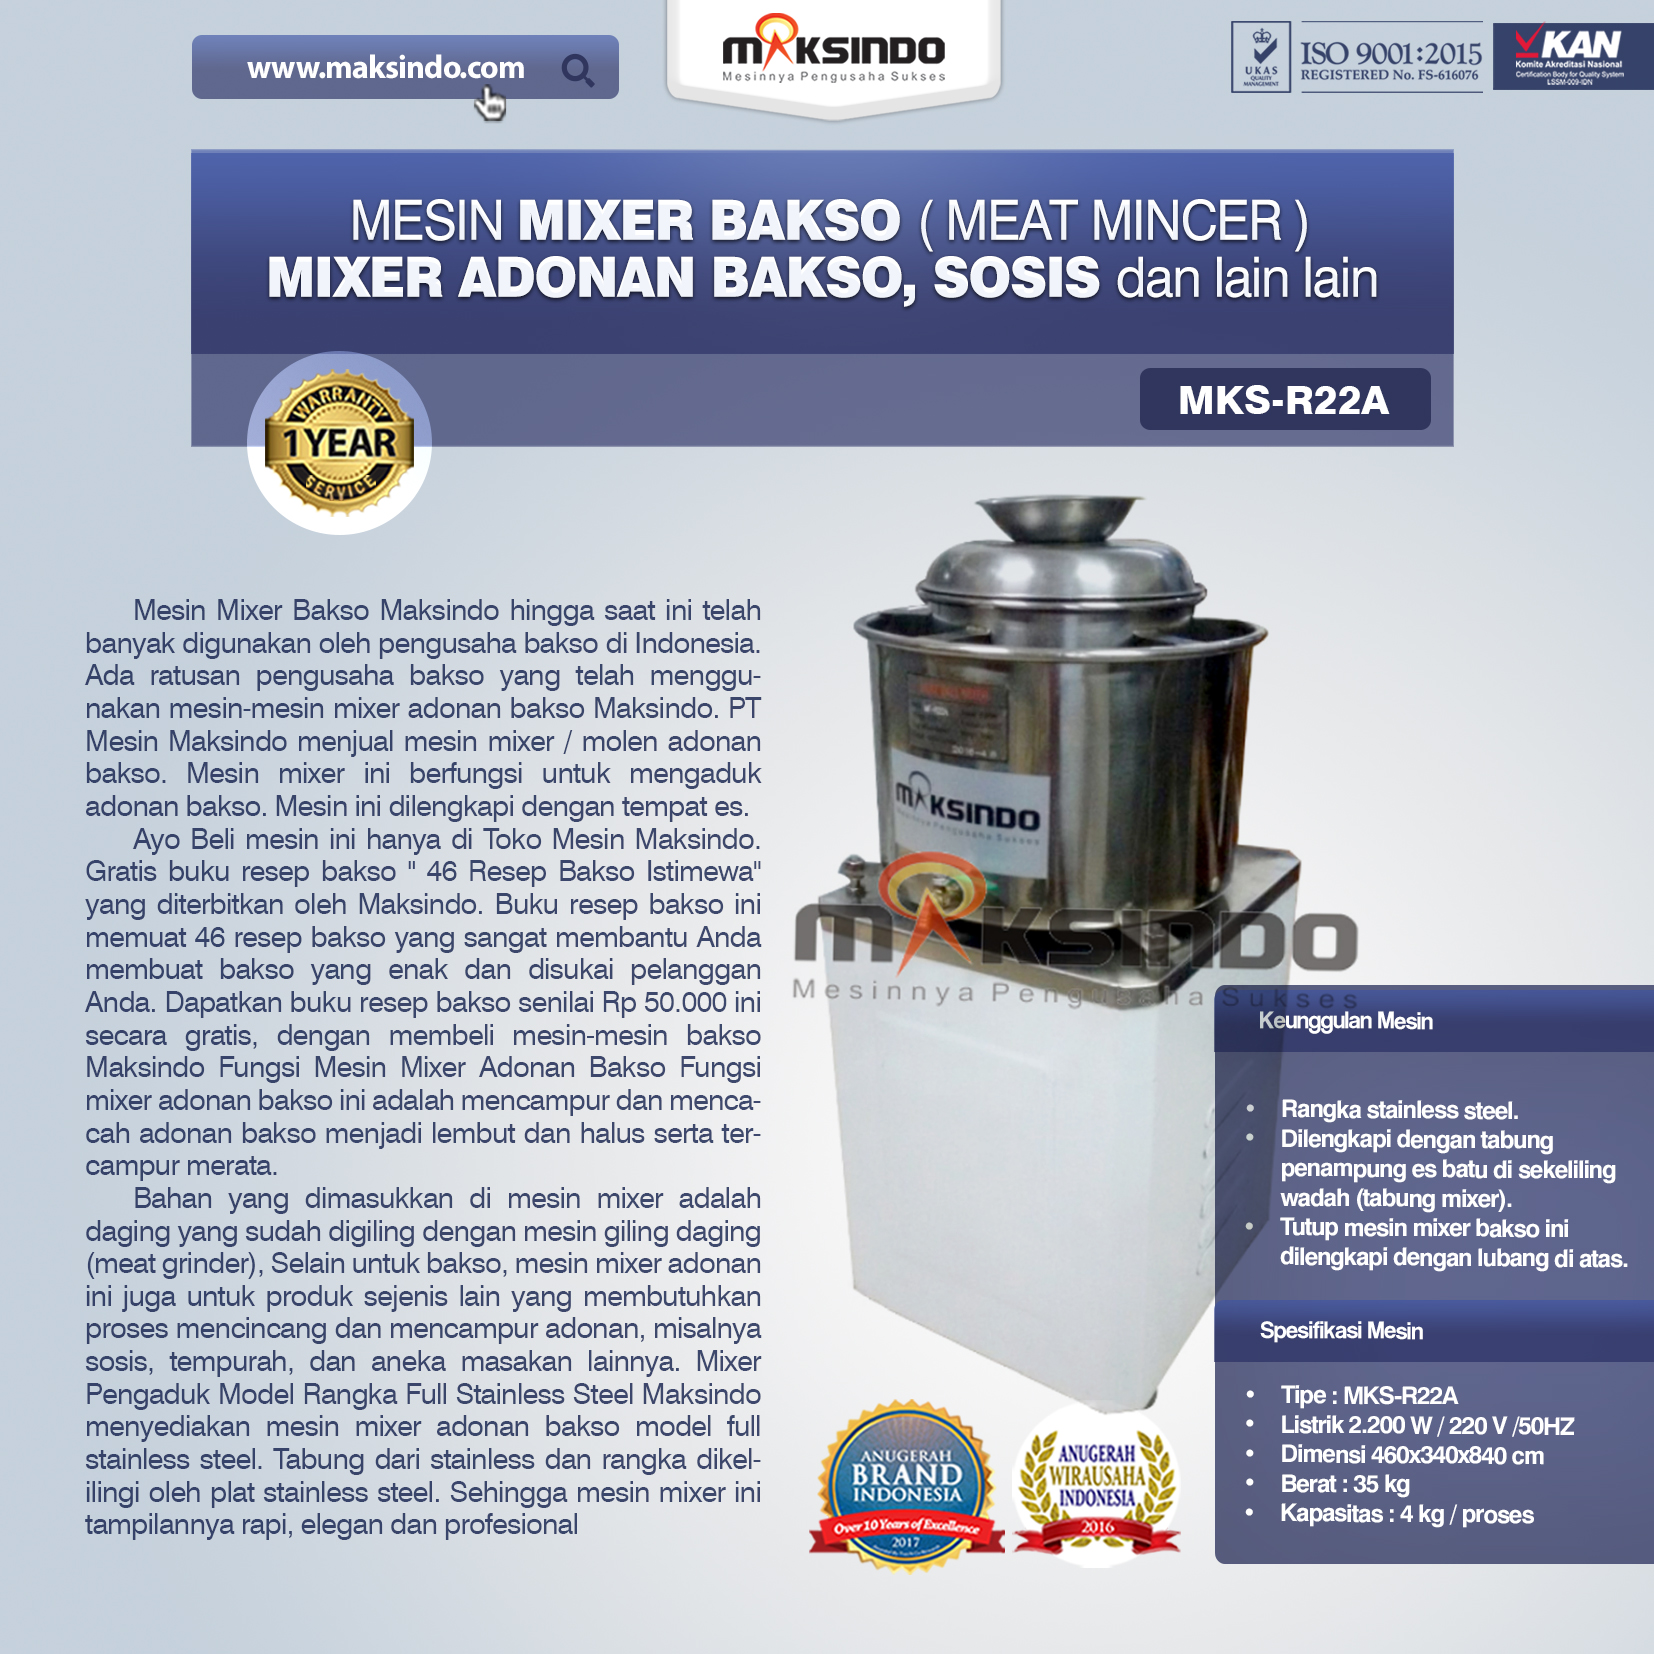 Jual Mesin Mixer Bakso di Palembang